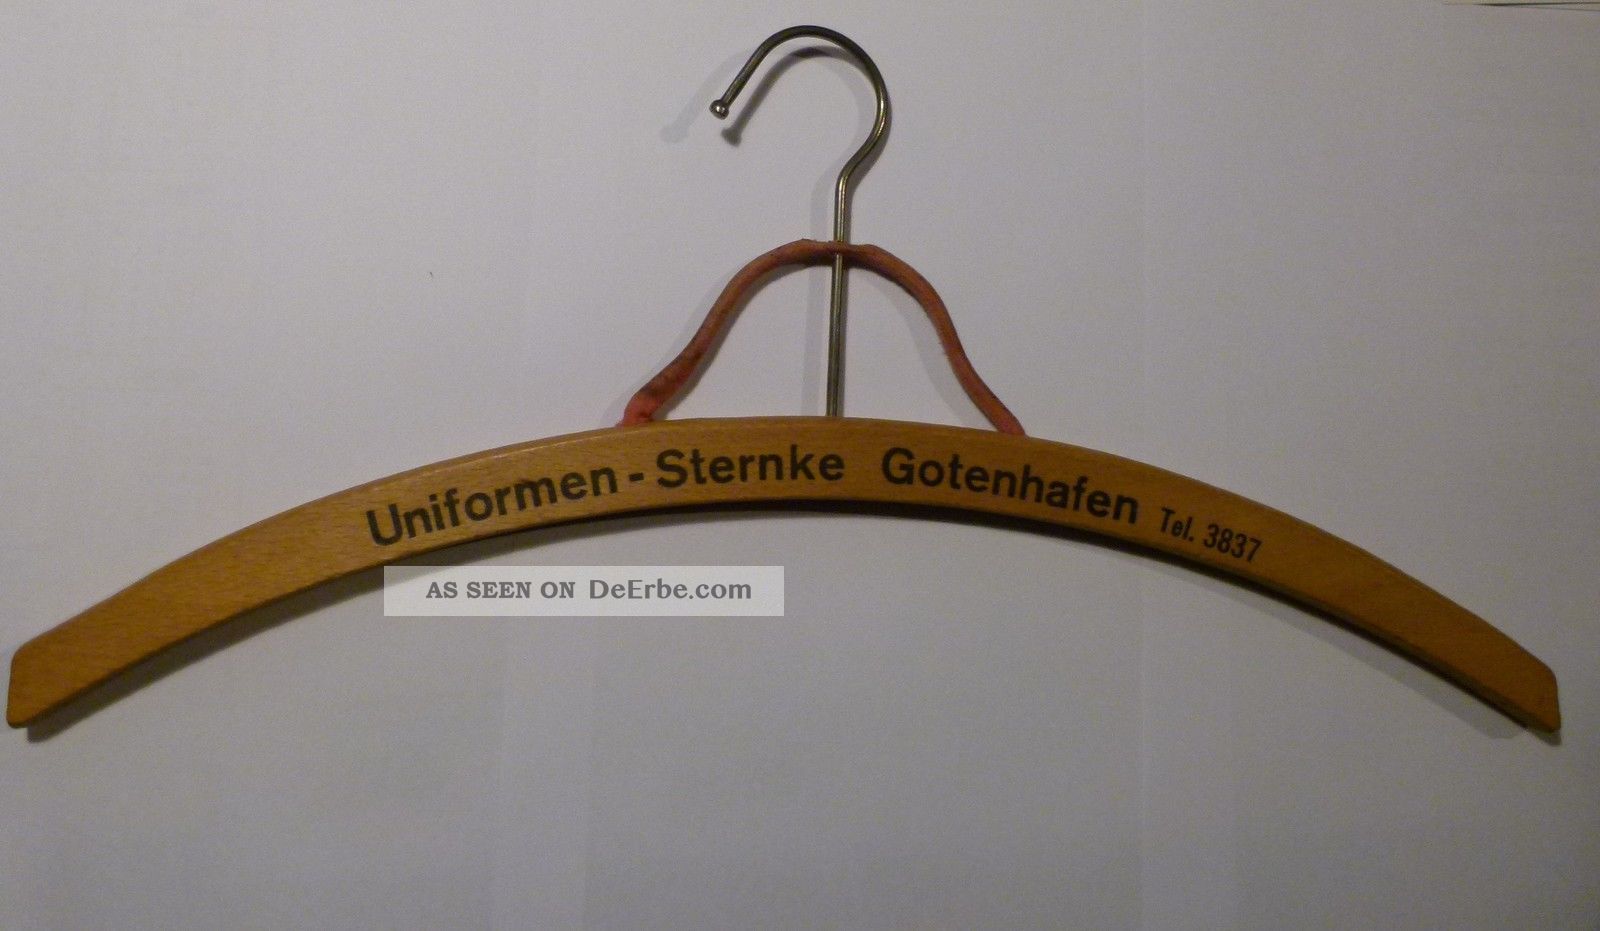 Alter Holz - Kleiderbügel Holzbügel Uniformen Sternke Gotenhafen Gdynia Ca.  1938 Accessoires Bild